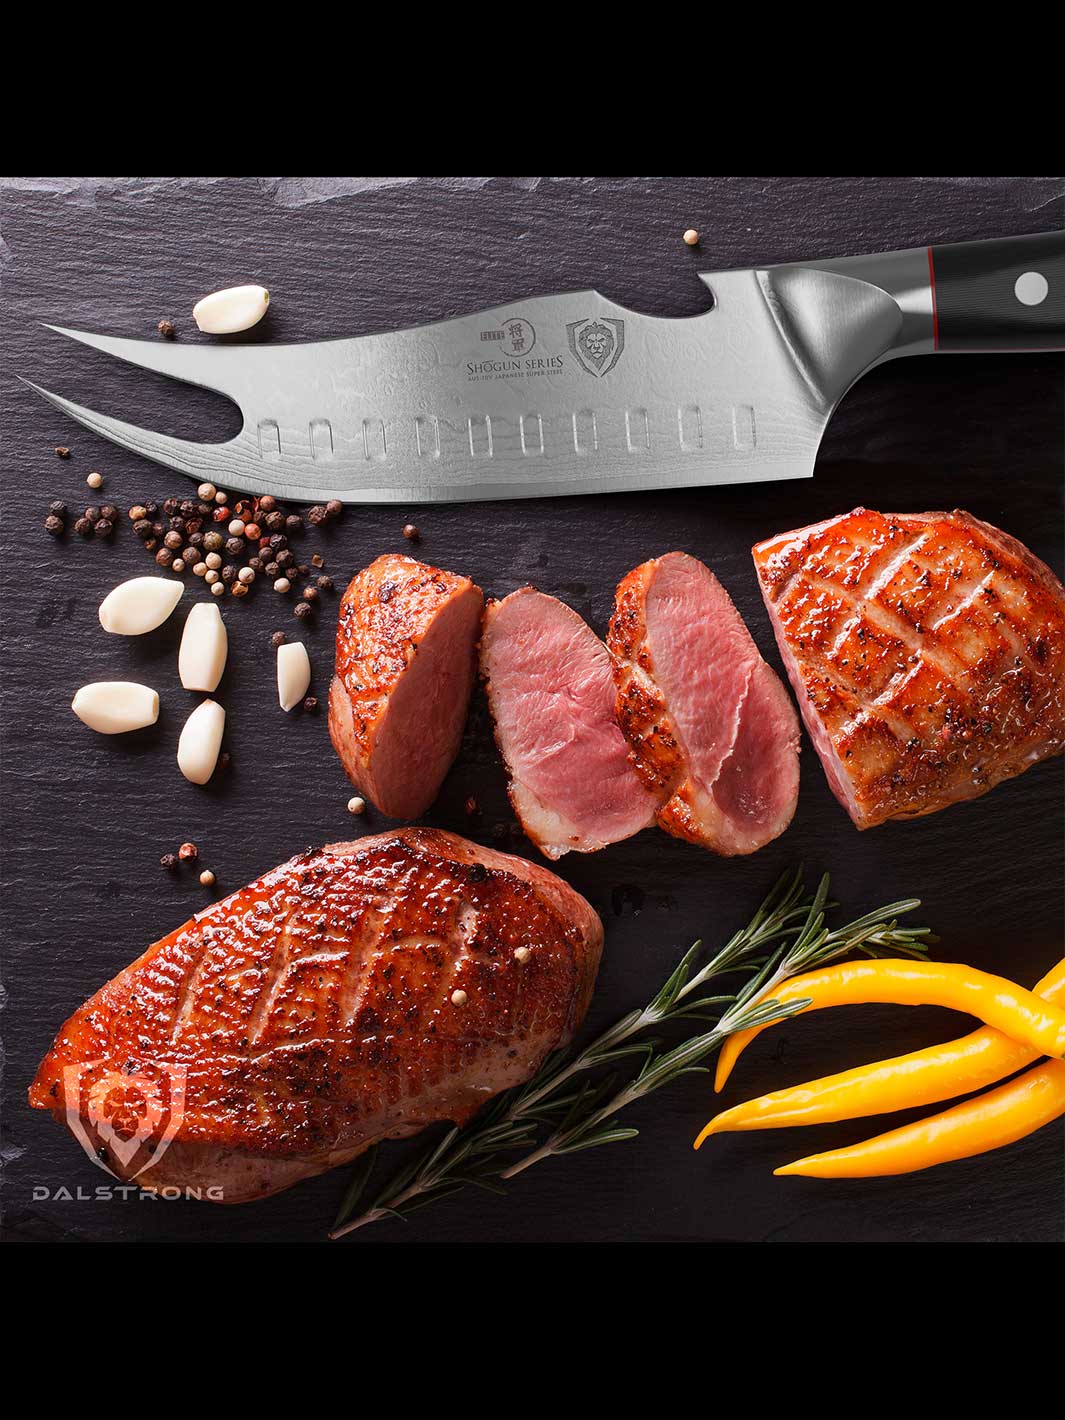 Steak Knife Bbq Meat 